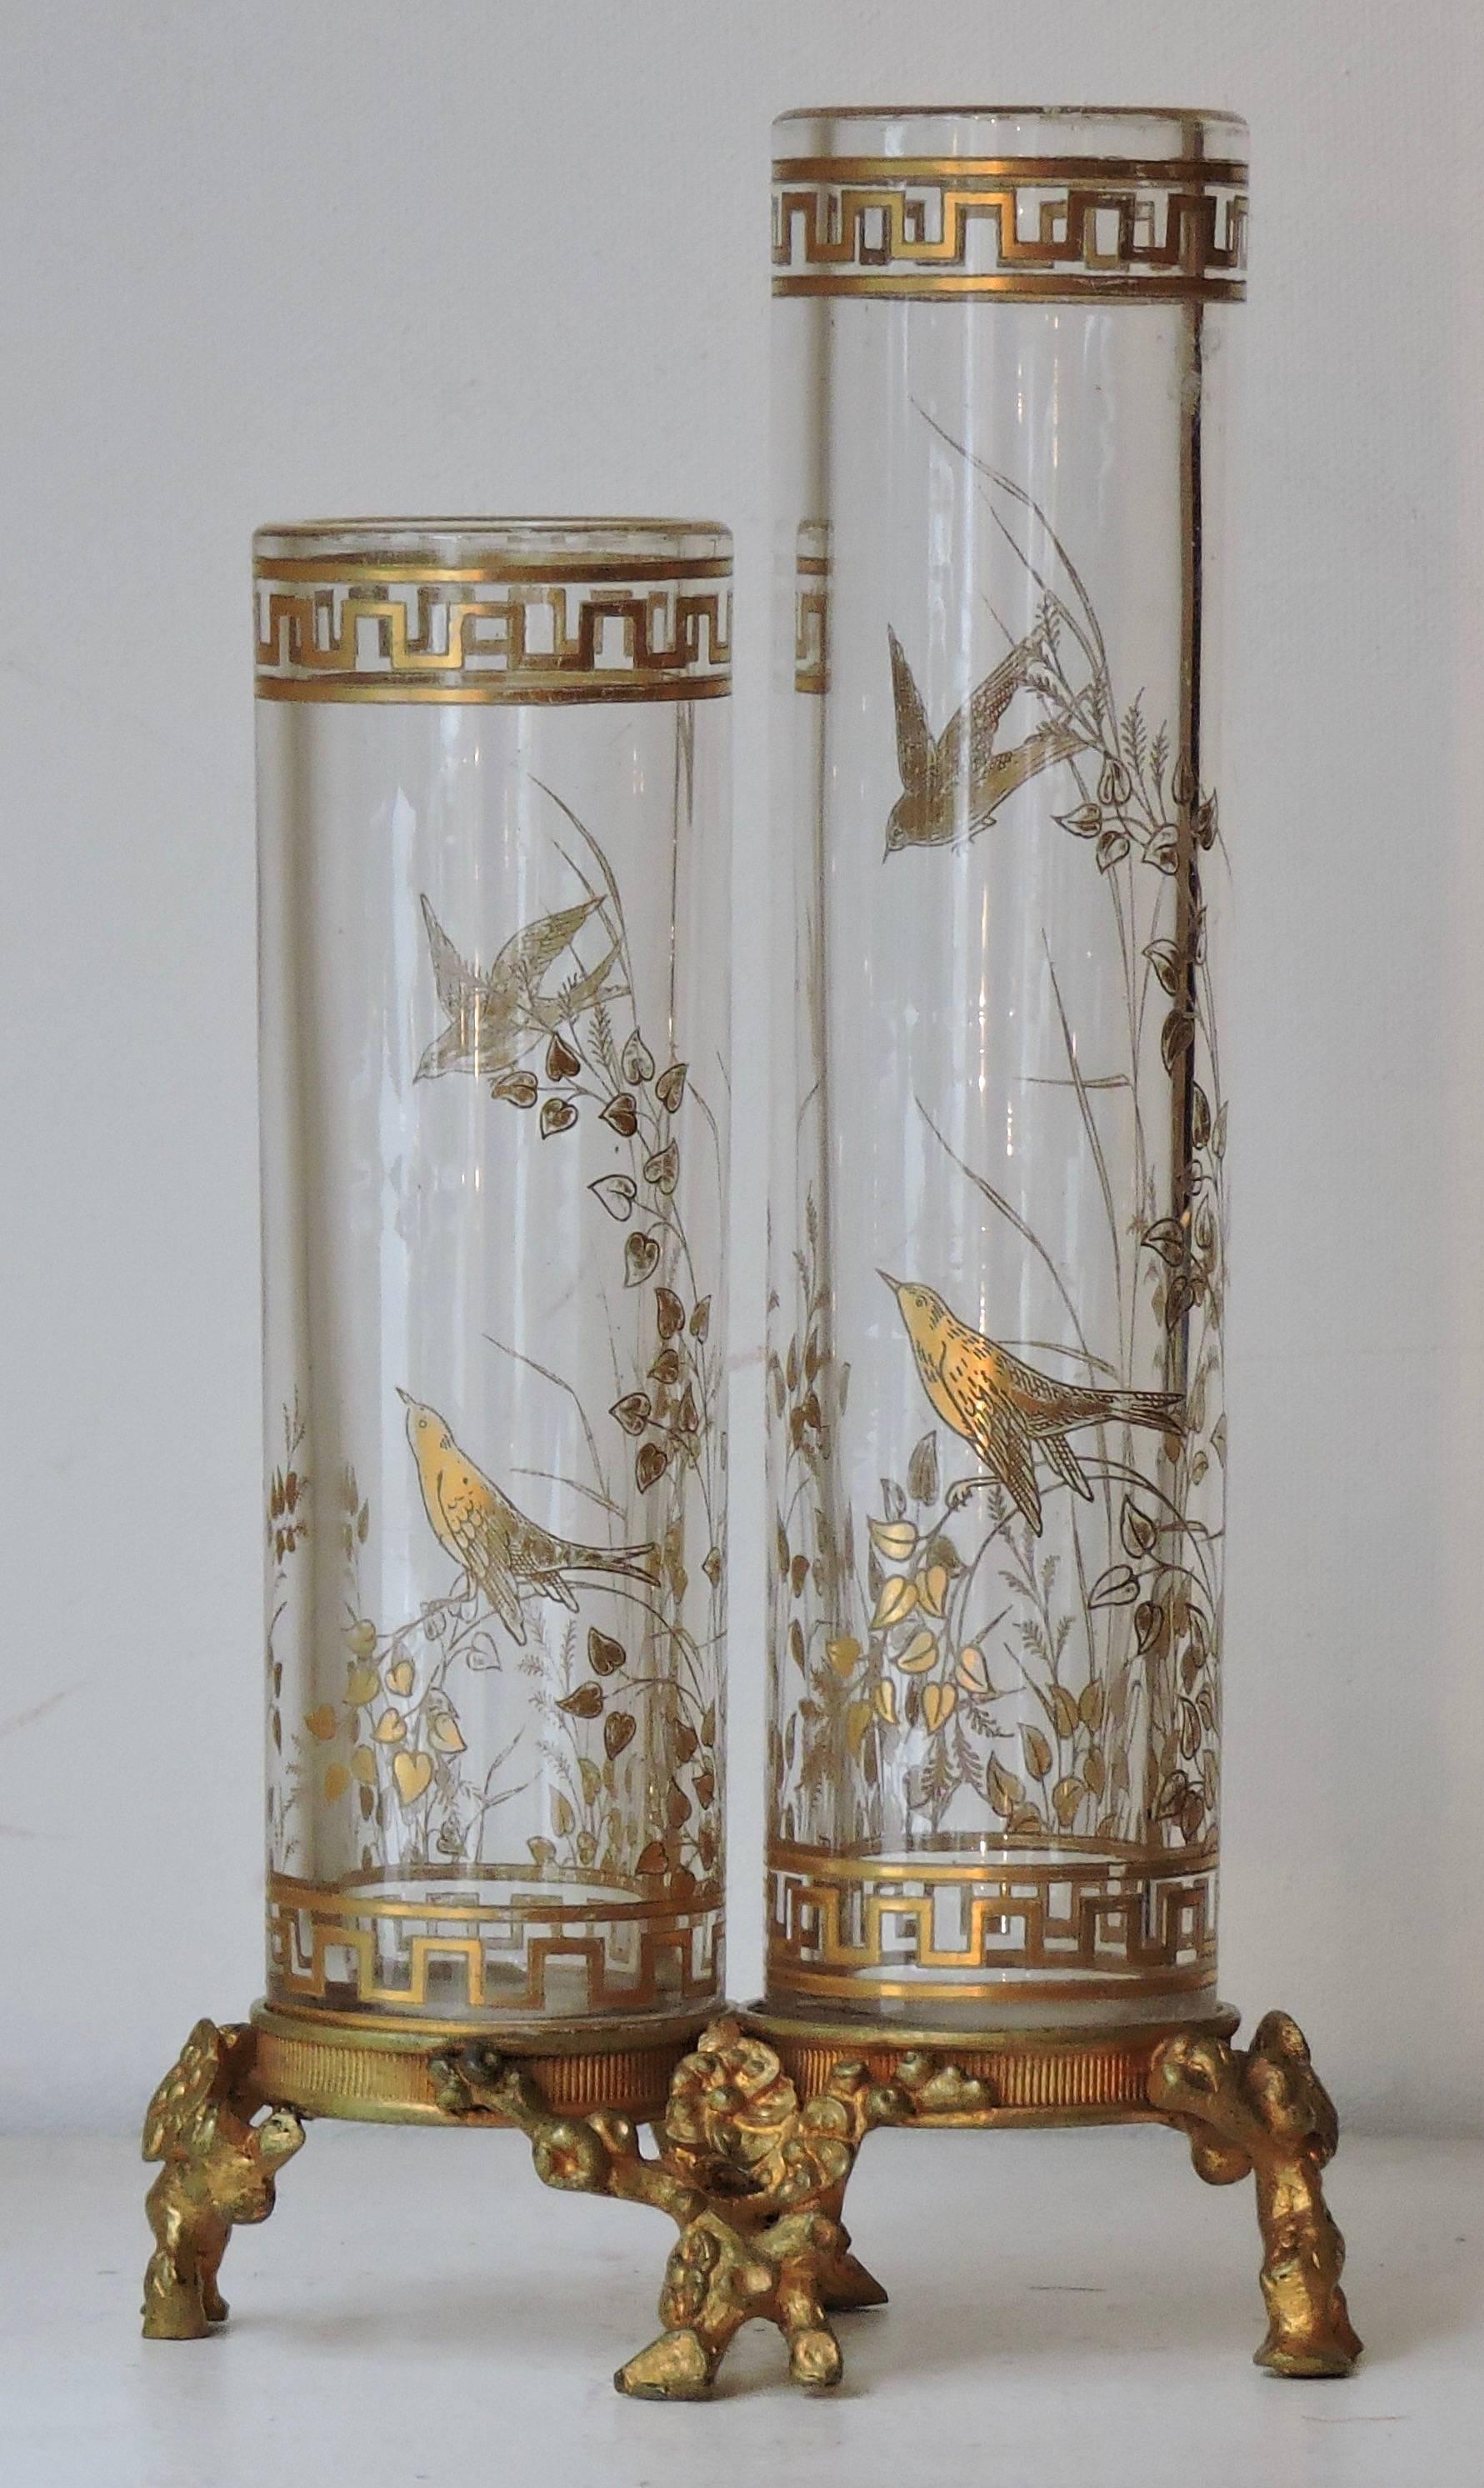 A Maison Baccarat Japonisme gilt painted crystal double vase with ormolu mount
birds and vegetal design
circa 1890.